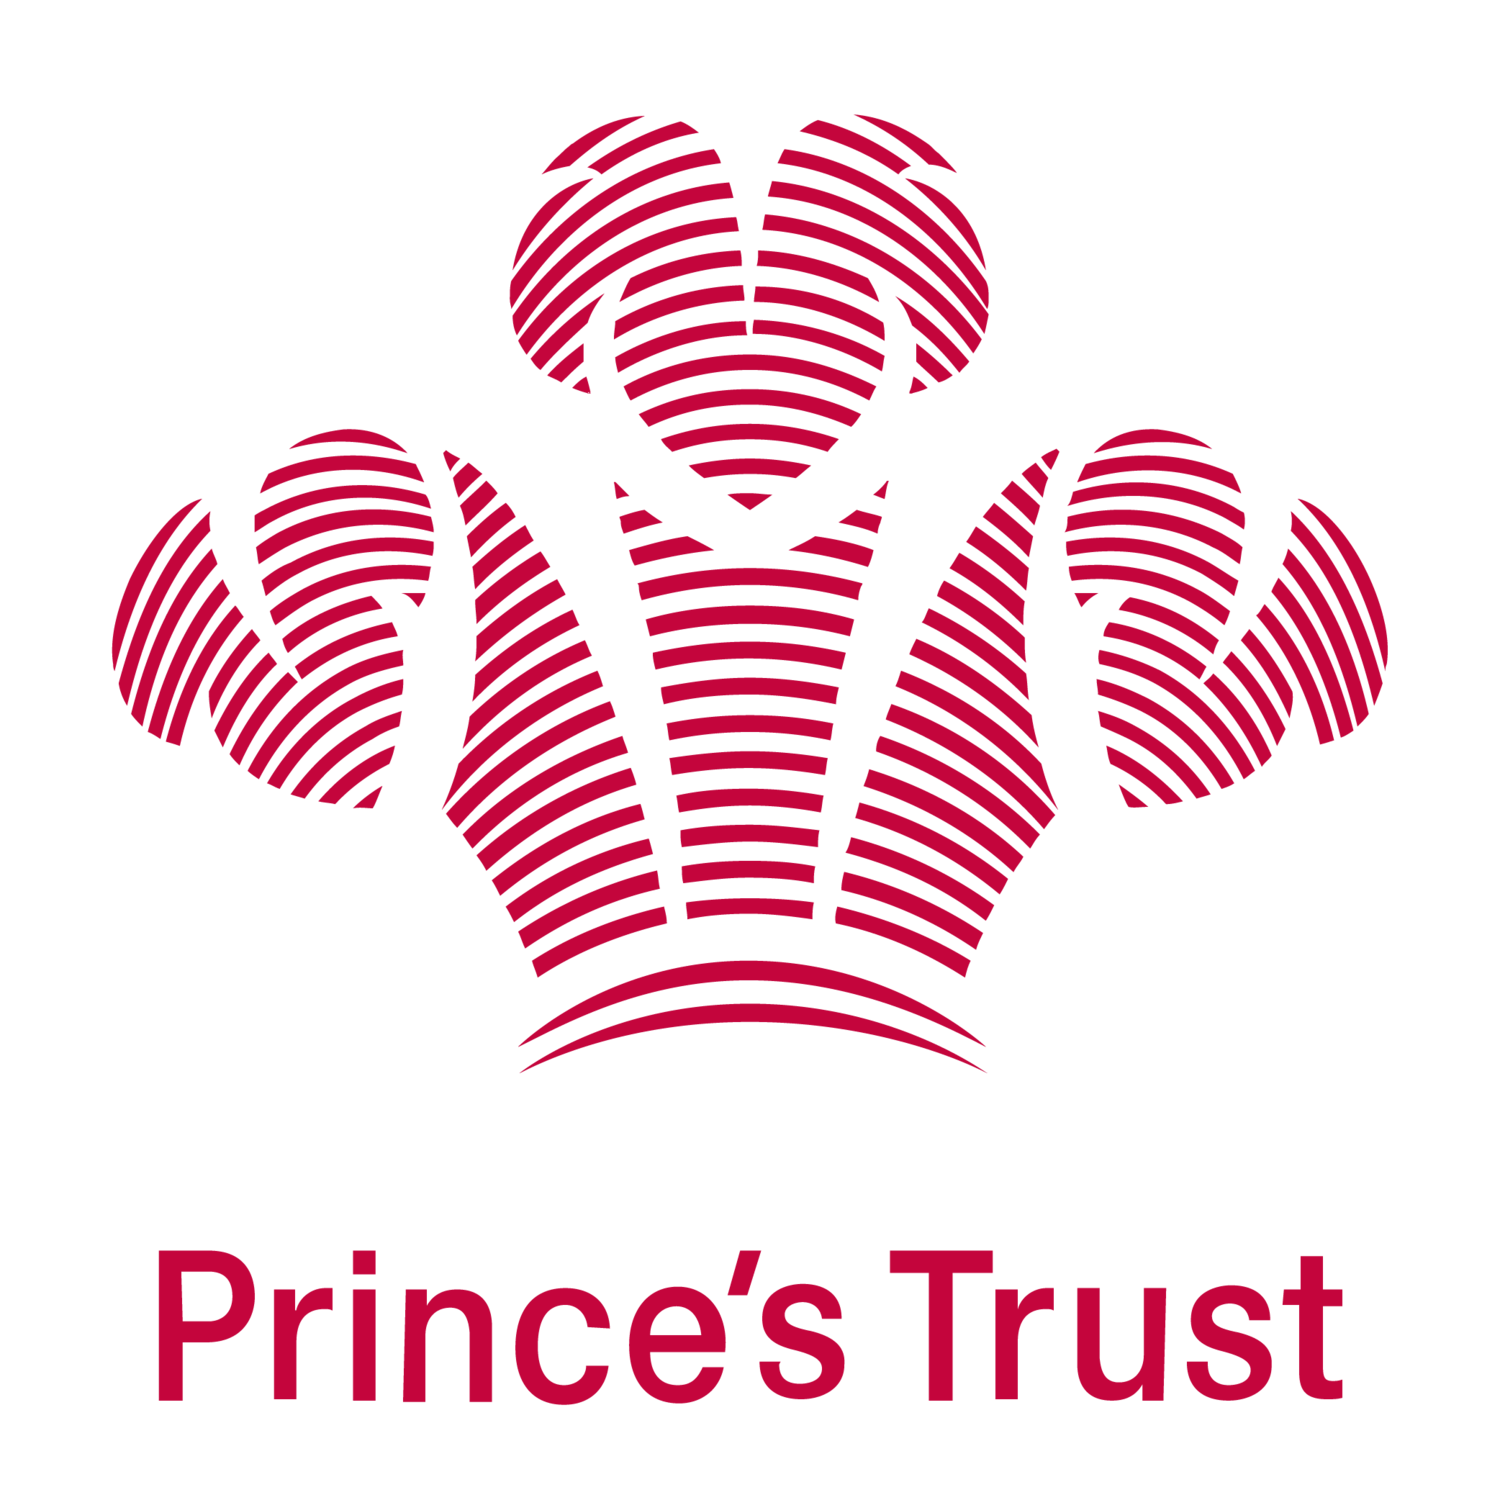 The Prince’s Trust Urban Music Festival